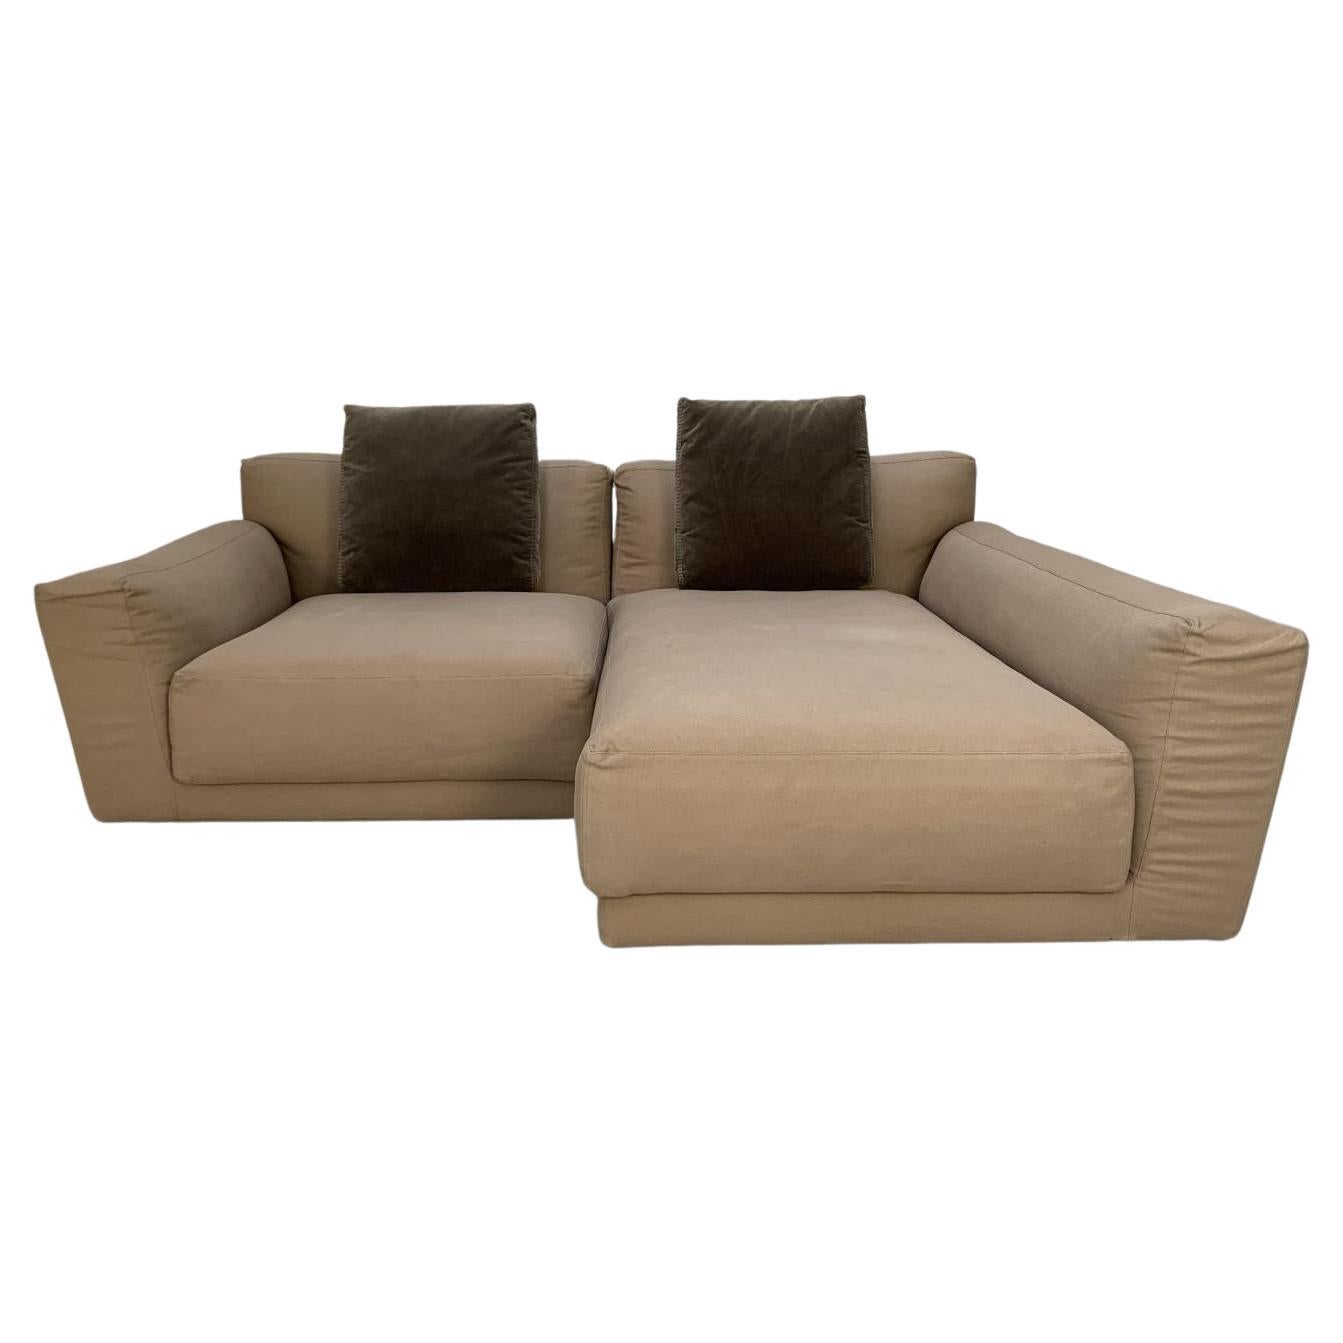 B&B Italia “Luis” 3-Seat Compact L-Shape Sofa – In “Ellade” Linen For Sale